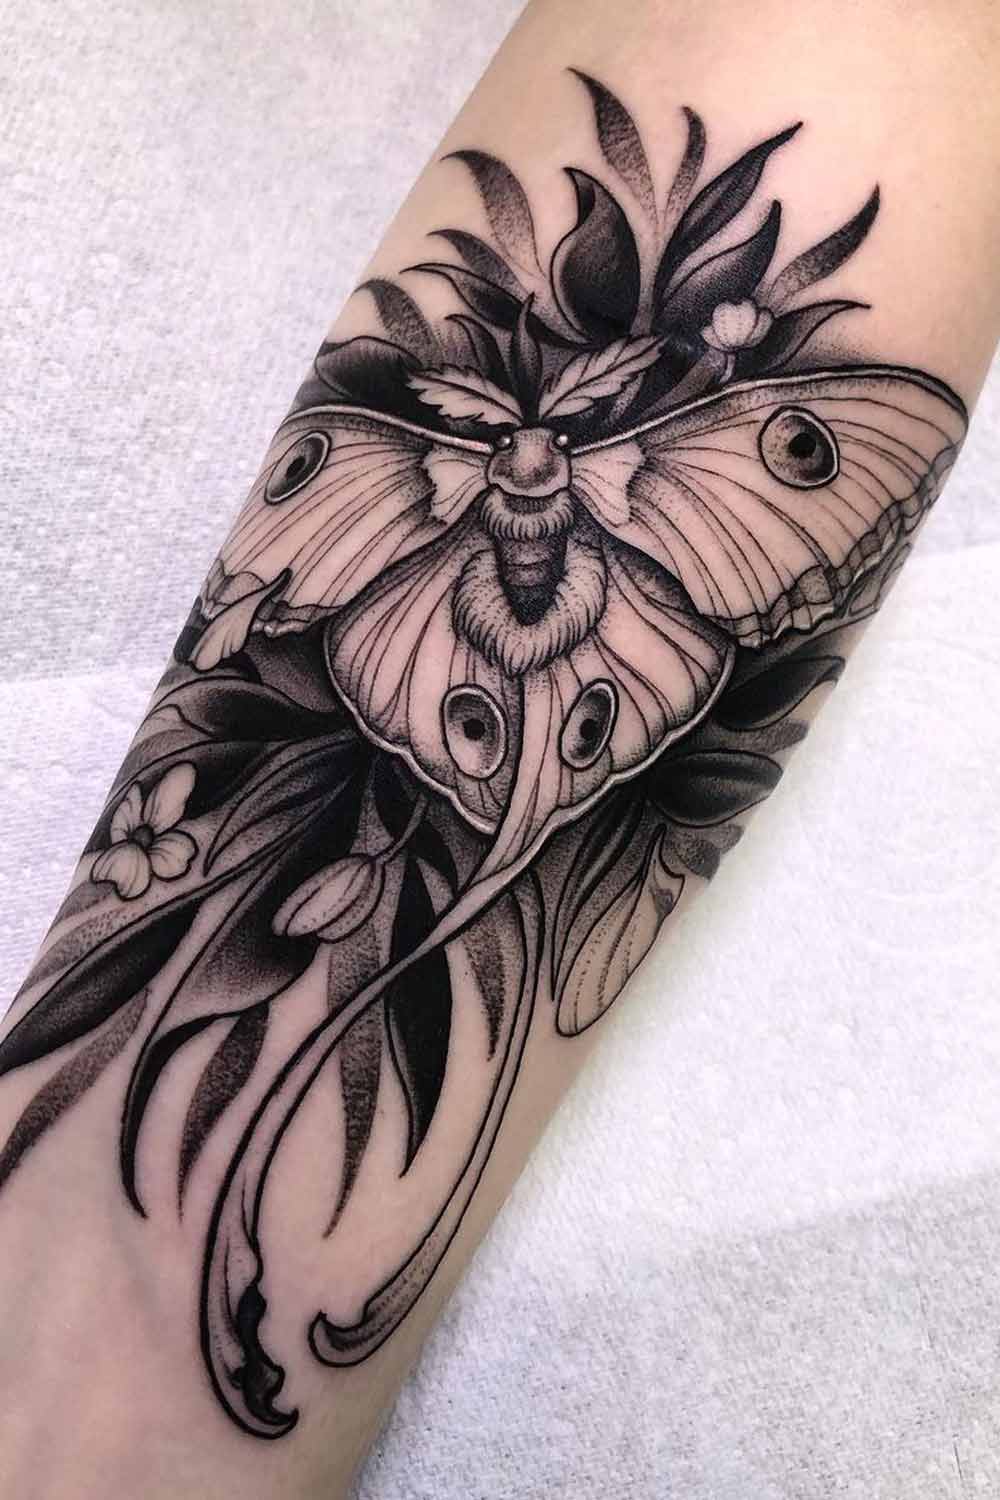 Dark Butterfly Design Tattoo for Arm